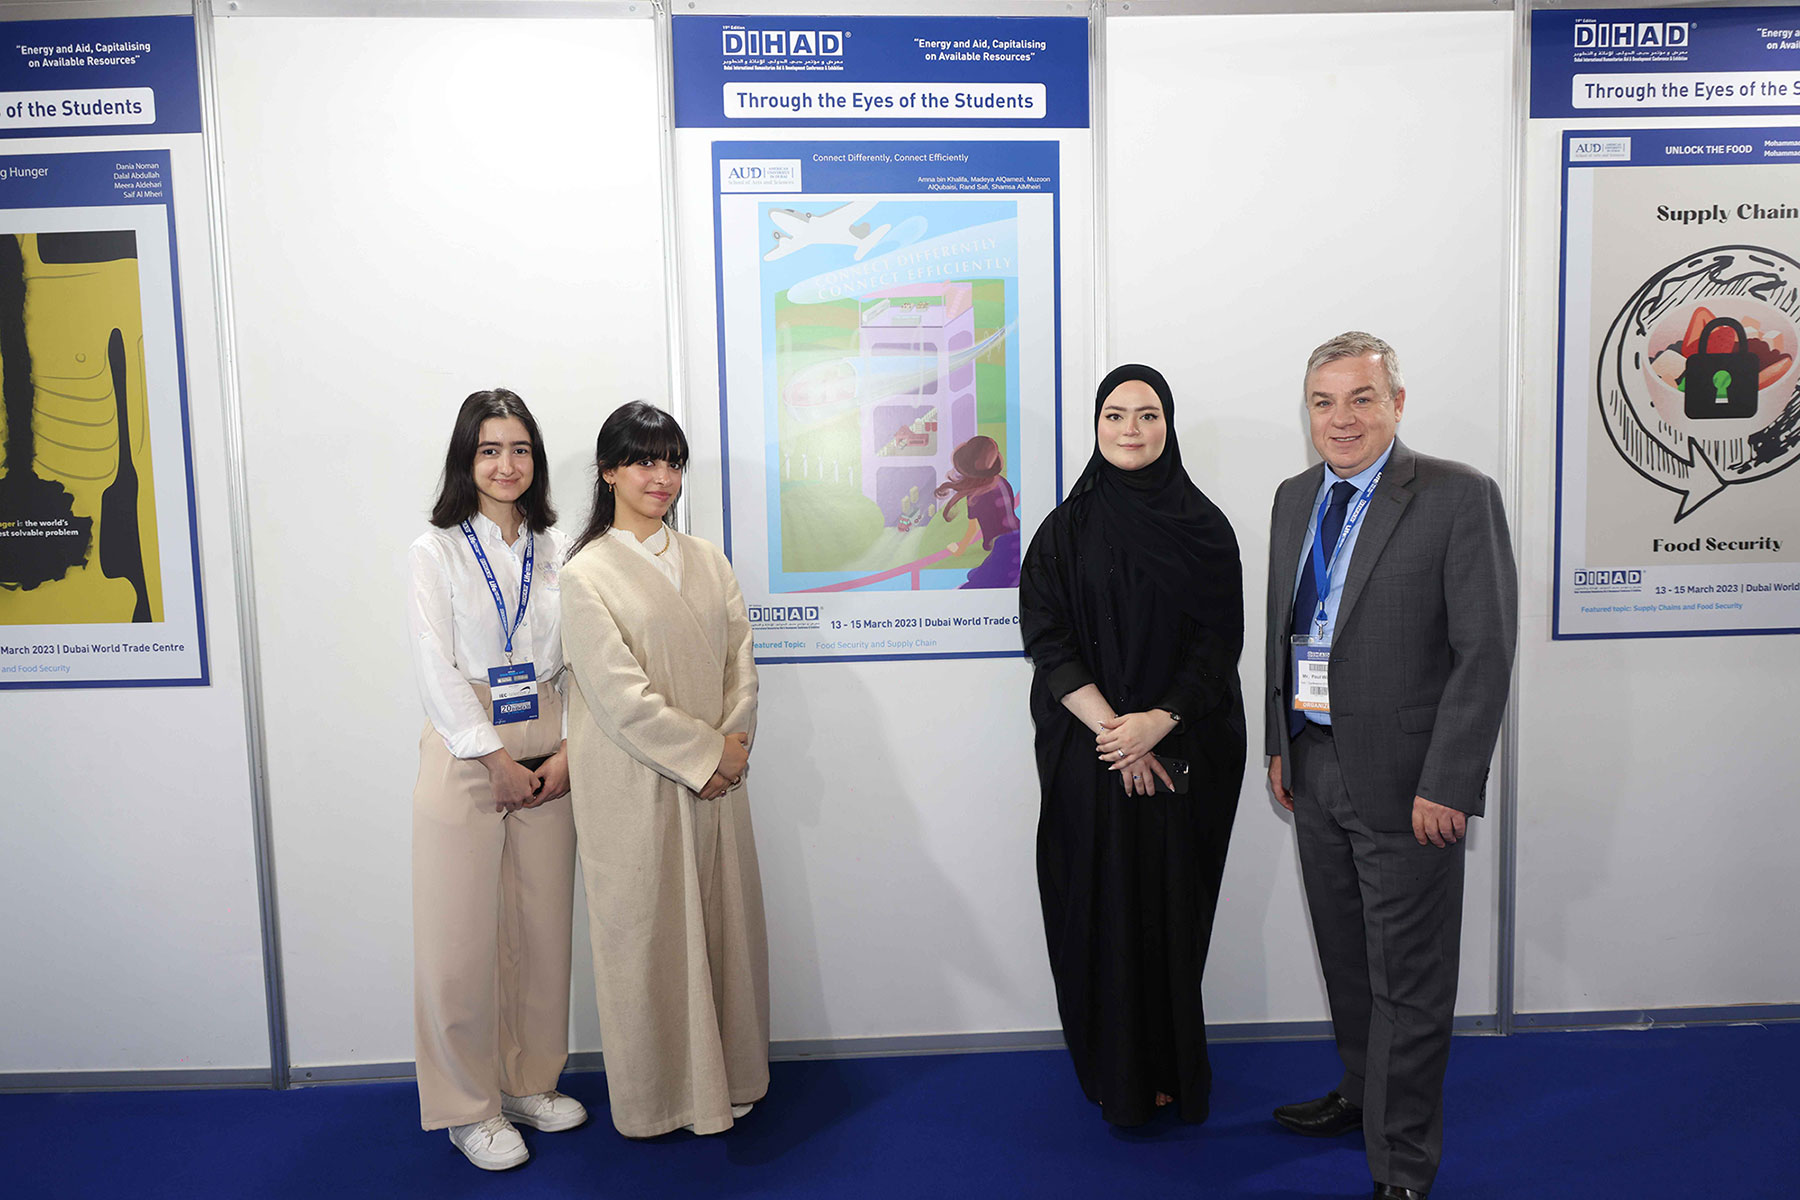 Students from the International Studies program exhibit at Dubai International Humanitarian Aid & Development event